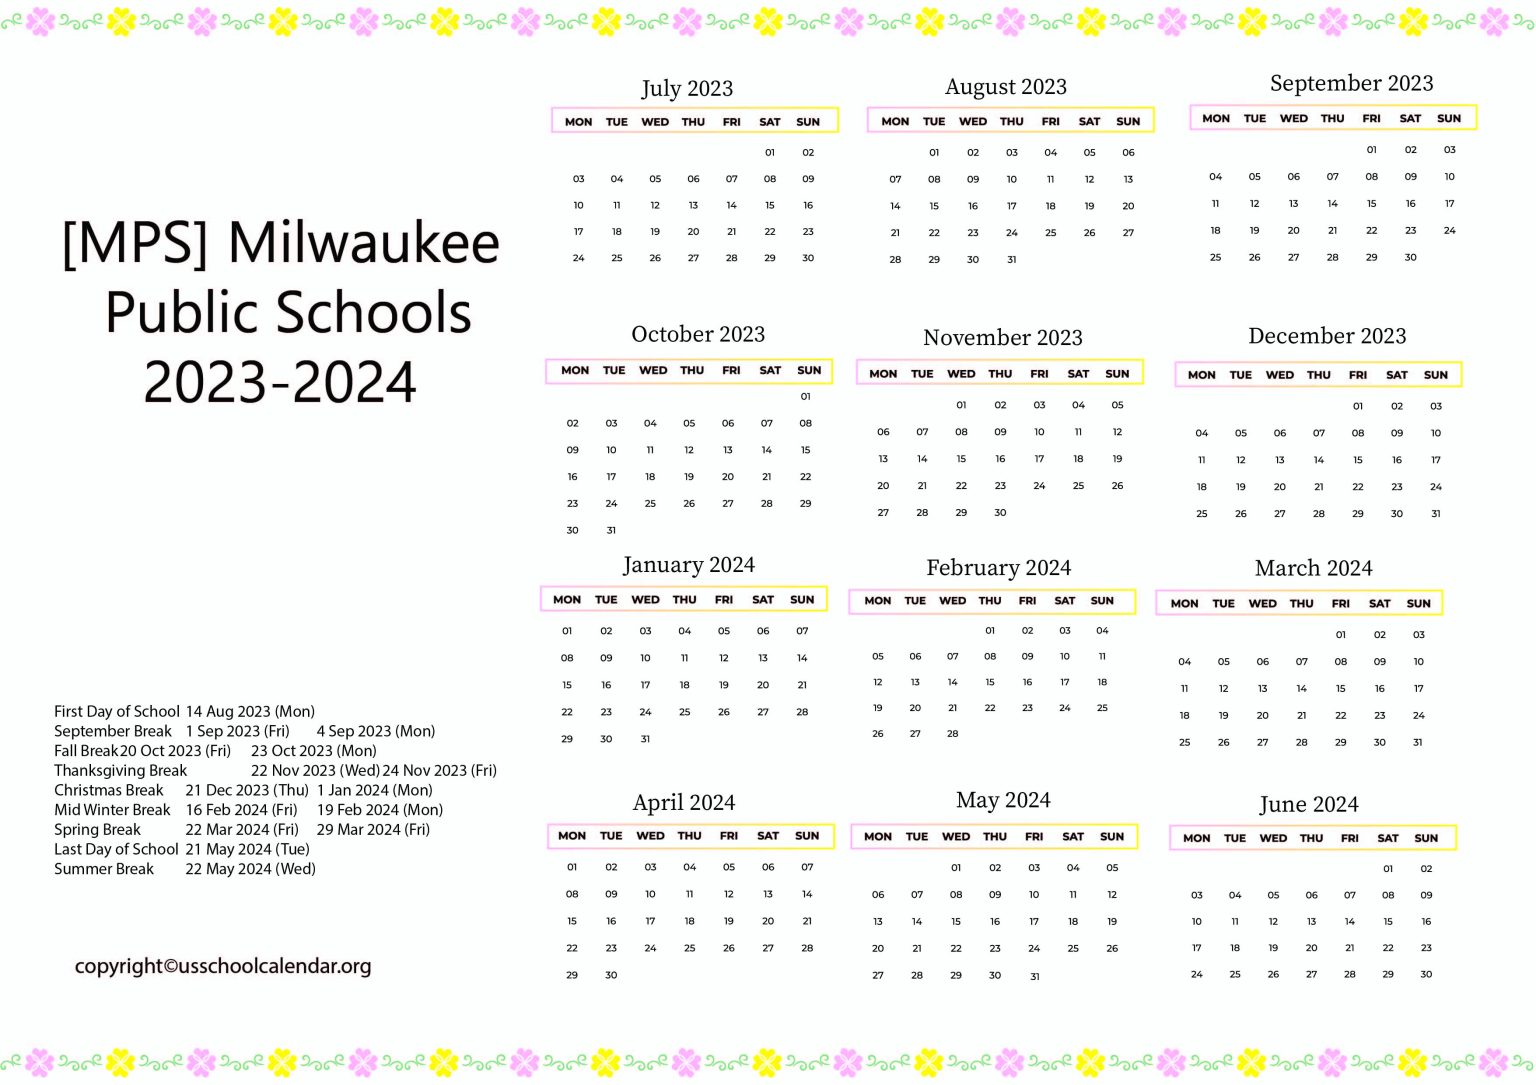 mps-milwaukee-public-schools-calendar-holidays-2023-2024